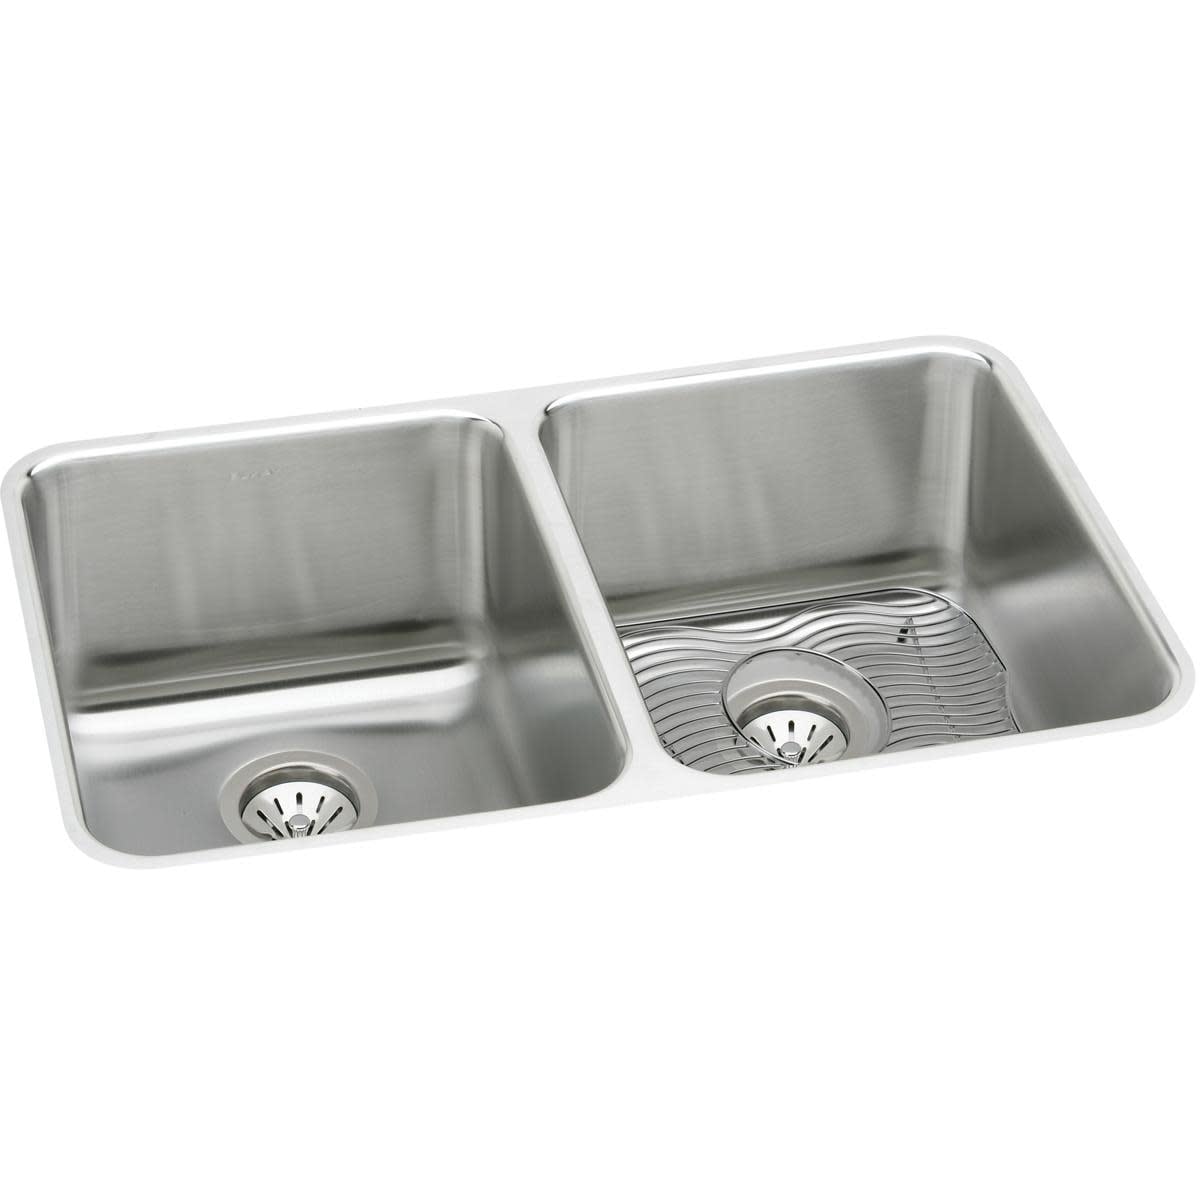 Elkay Eluh361710dbg Gourmet Lustertone Stainless Steel 35 3 4 X 18 1 2 Undermount Double Basin Kitchen Sink With 10 Depth